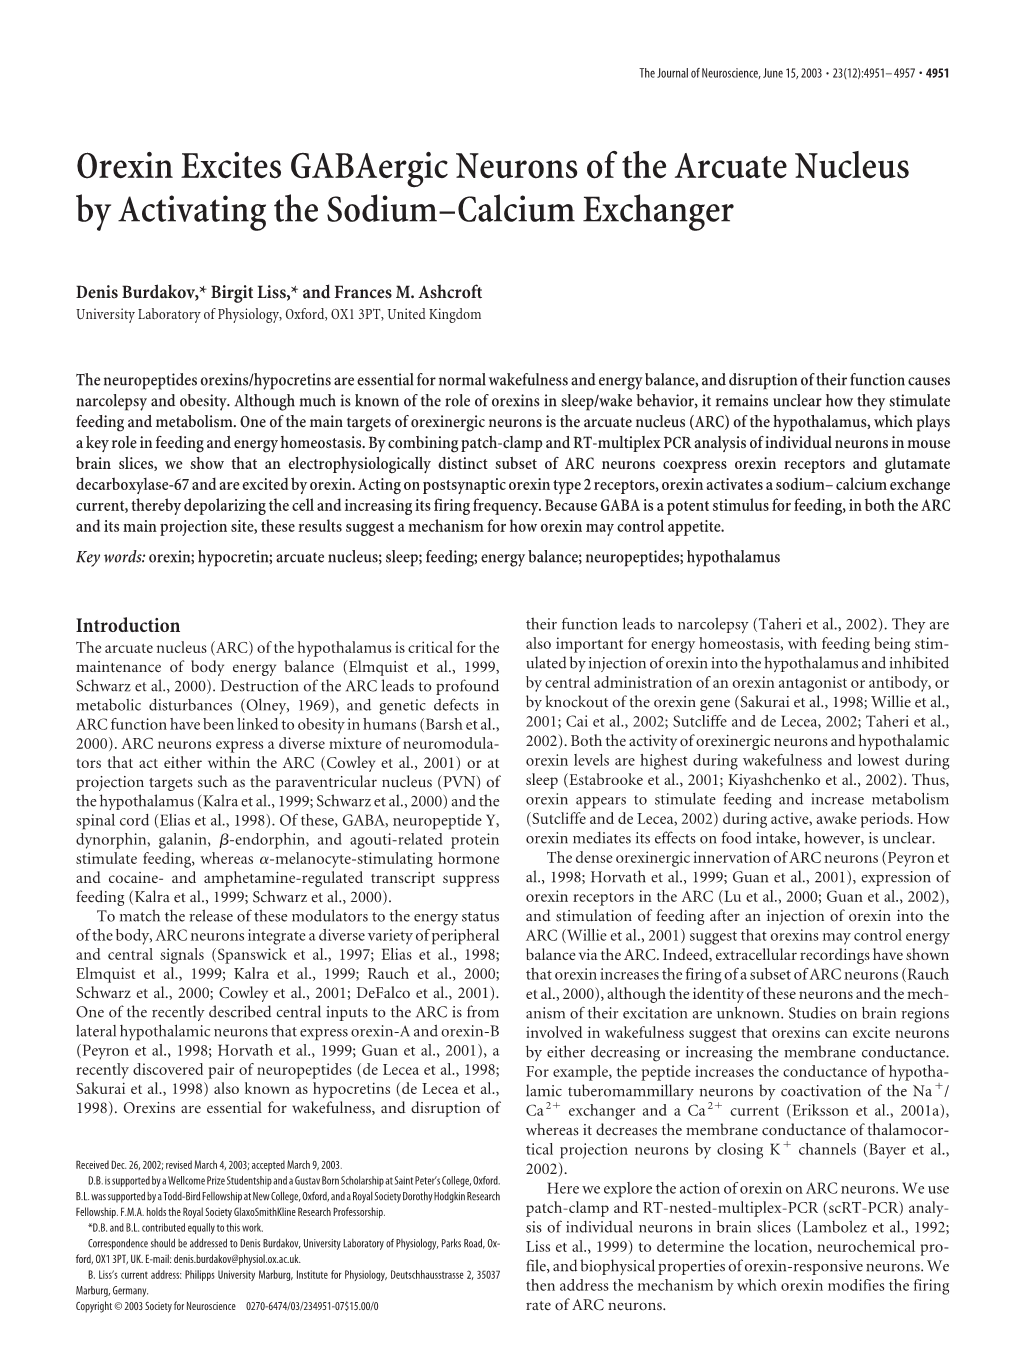 Orexin Excites Gabaergic Neurons of the Arcuate Nucleus by Activating the Sodium–Calcium Exchanger